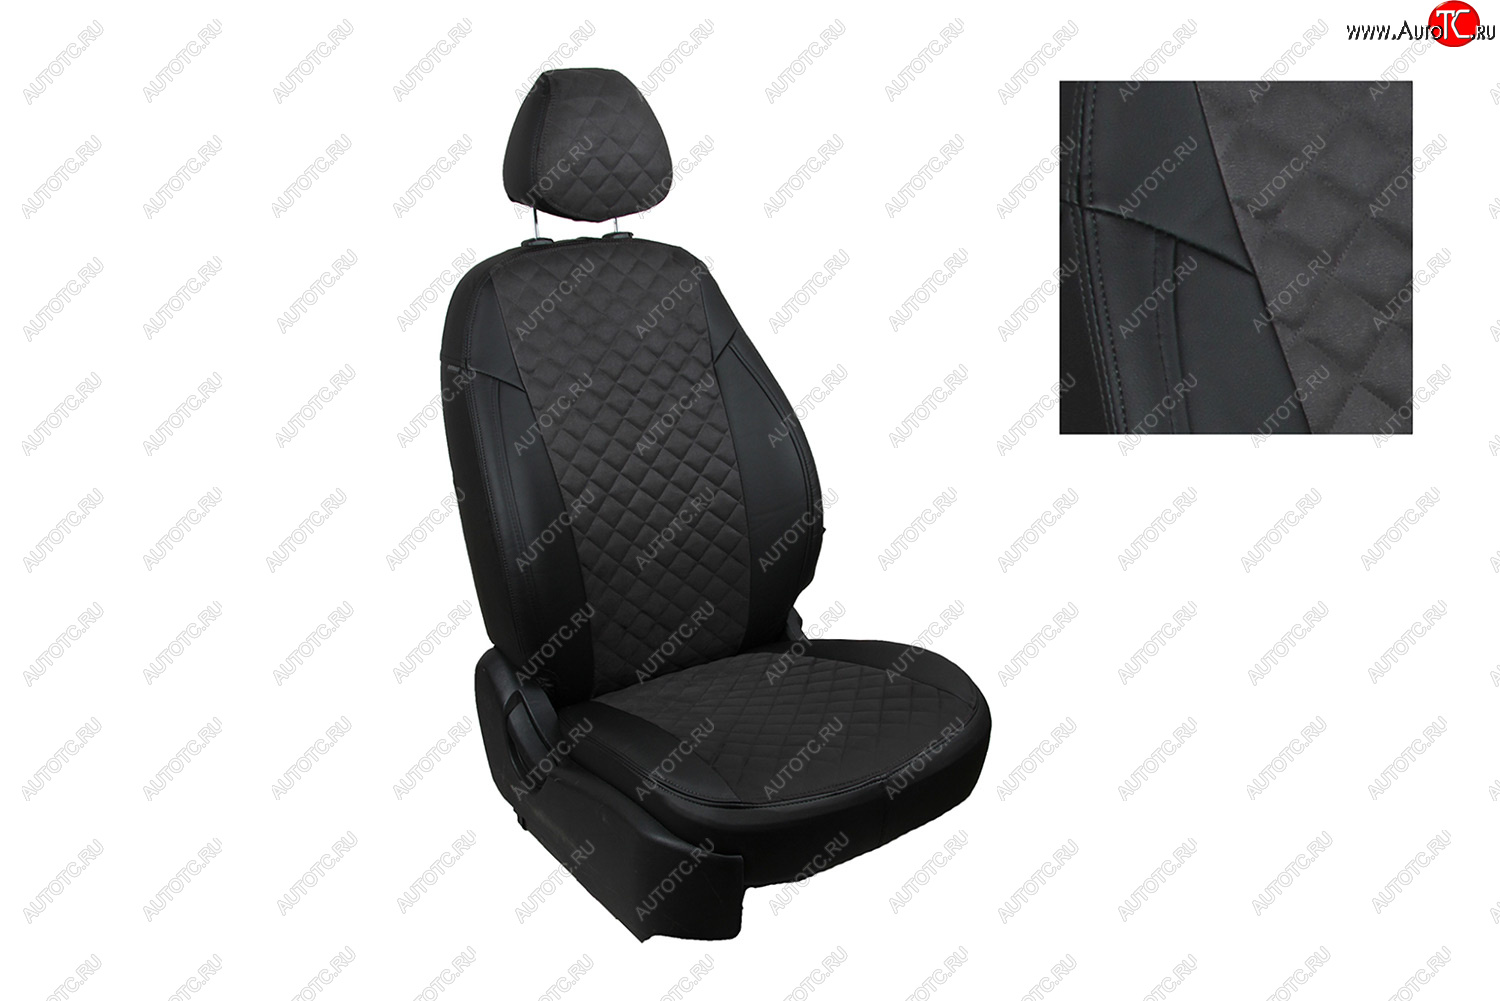 6 699 р. Чехлы для сидений Seintex Ромб Алькантара  Daewoo Matiz ( M100,  M200,  M250) (1998-2015)  с доставкой в г. Калуга